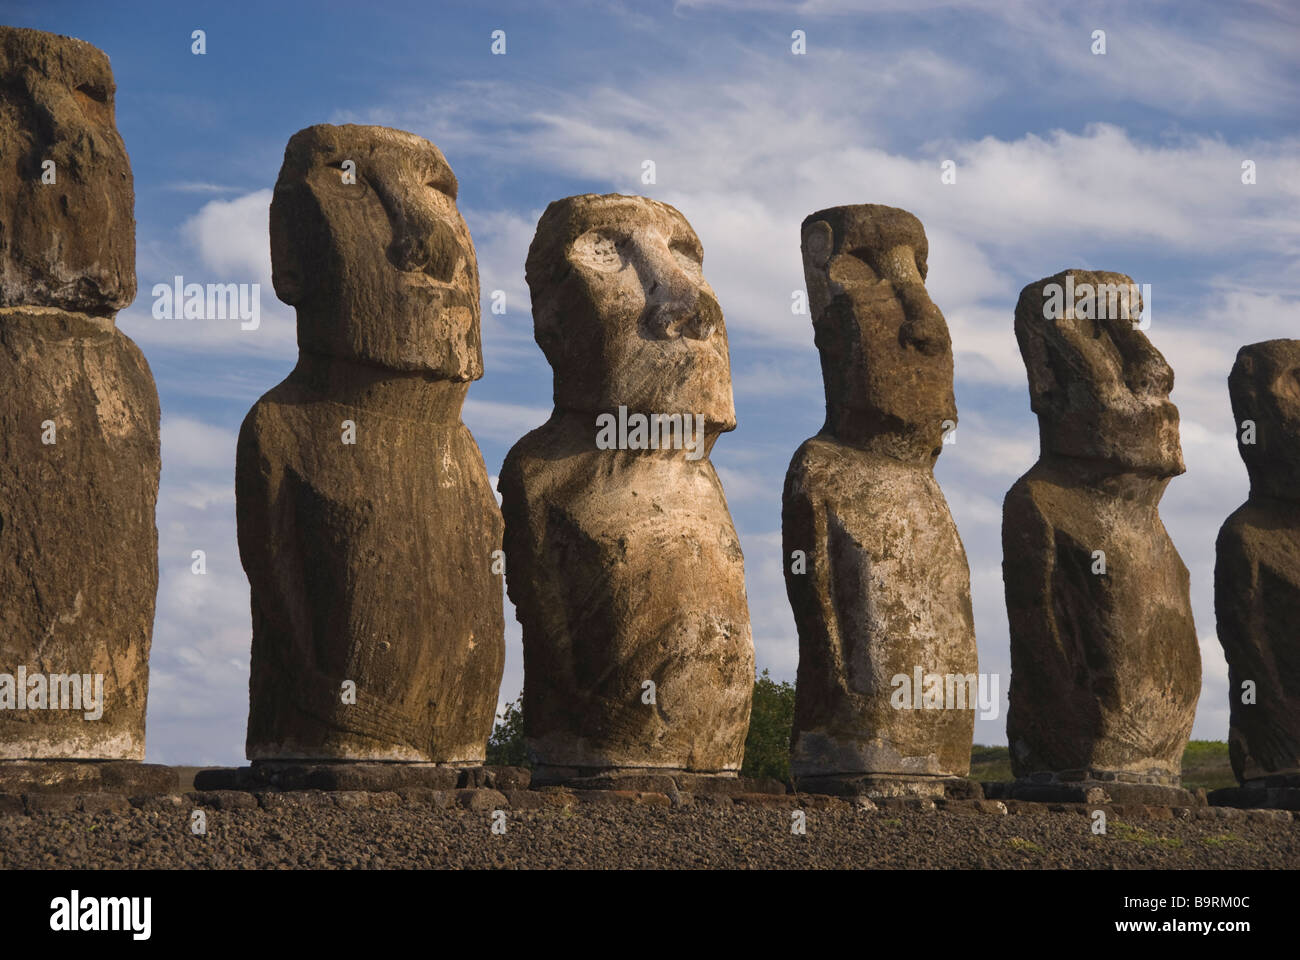 Elk198 5374 Cile Isola di Pasqua Ahu Tongariki moai statue Foto Stock